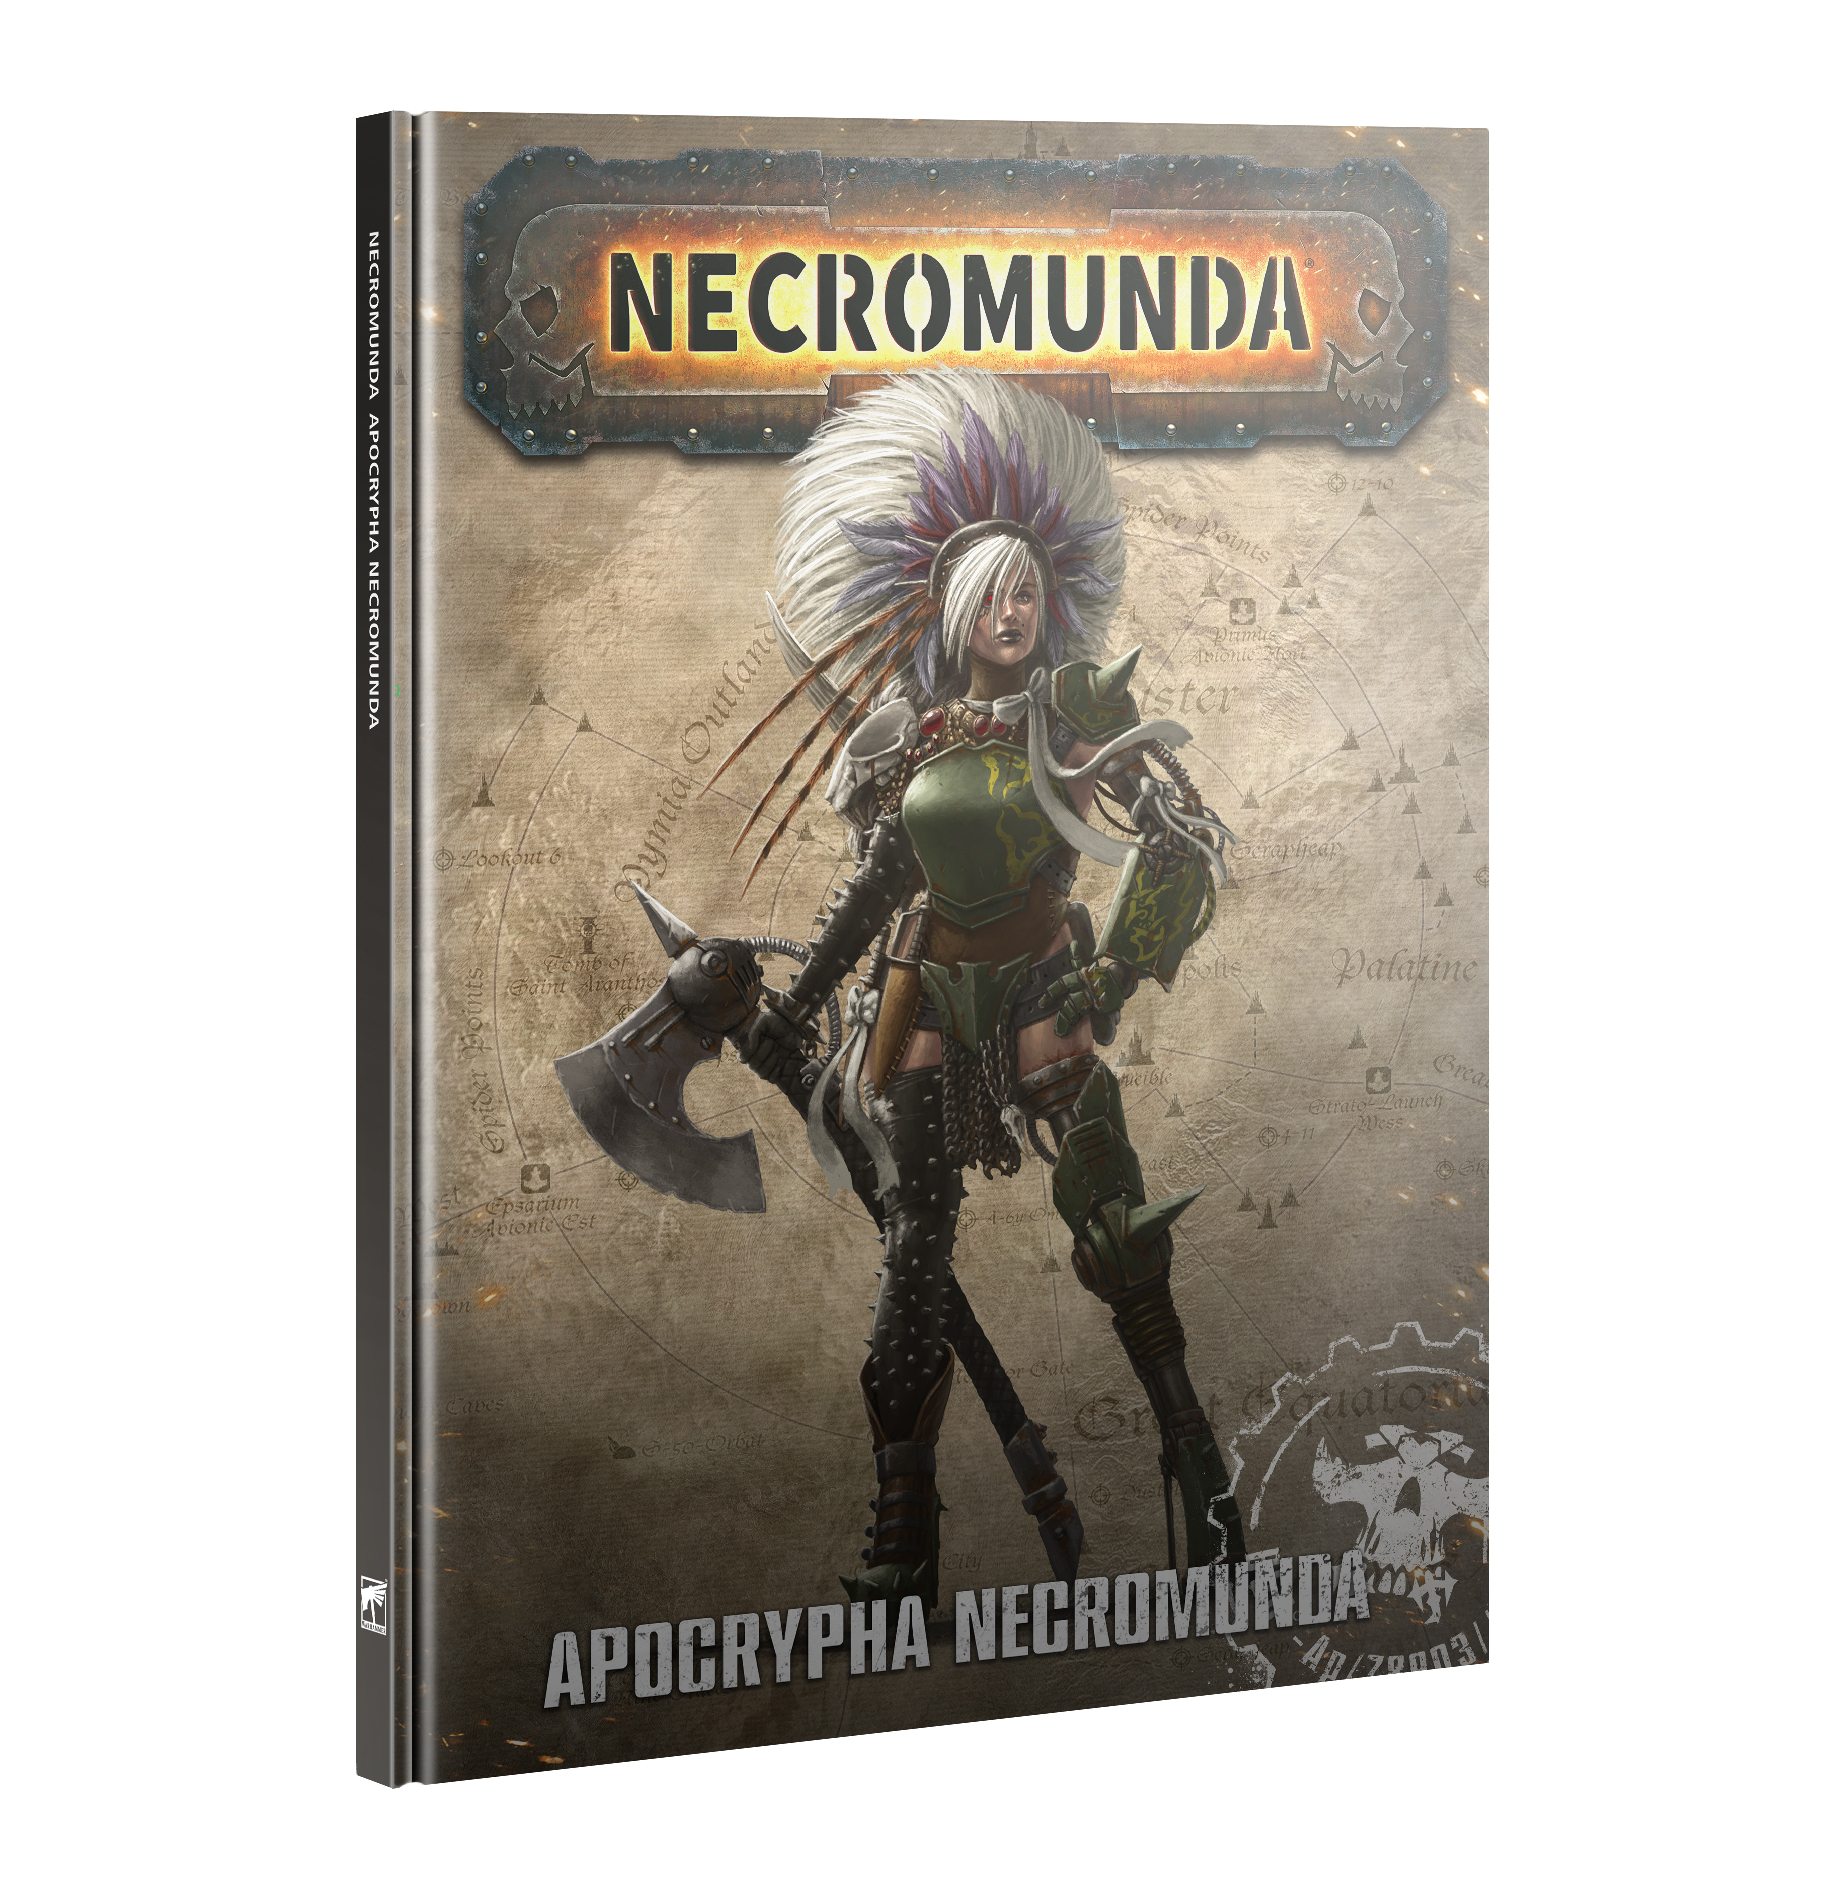 apocrypha necromunda cover